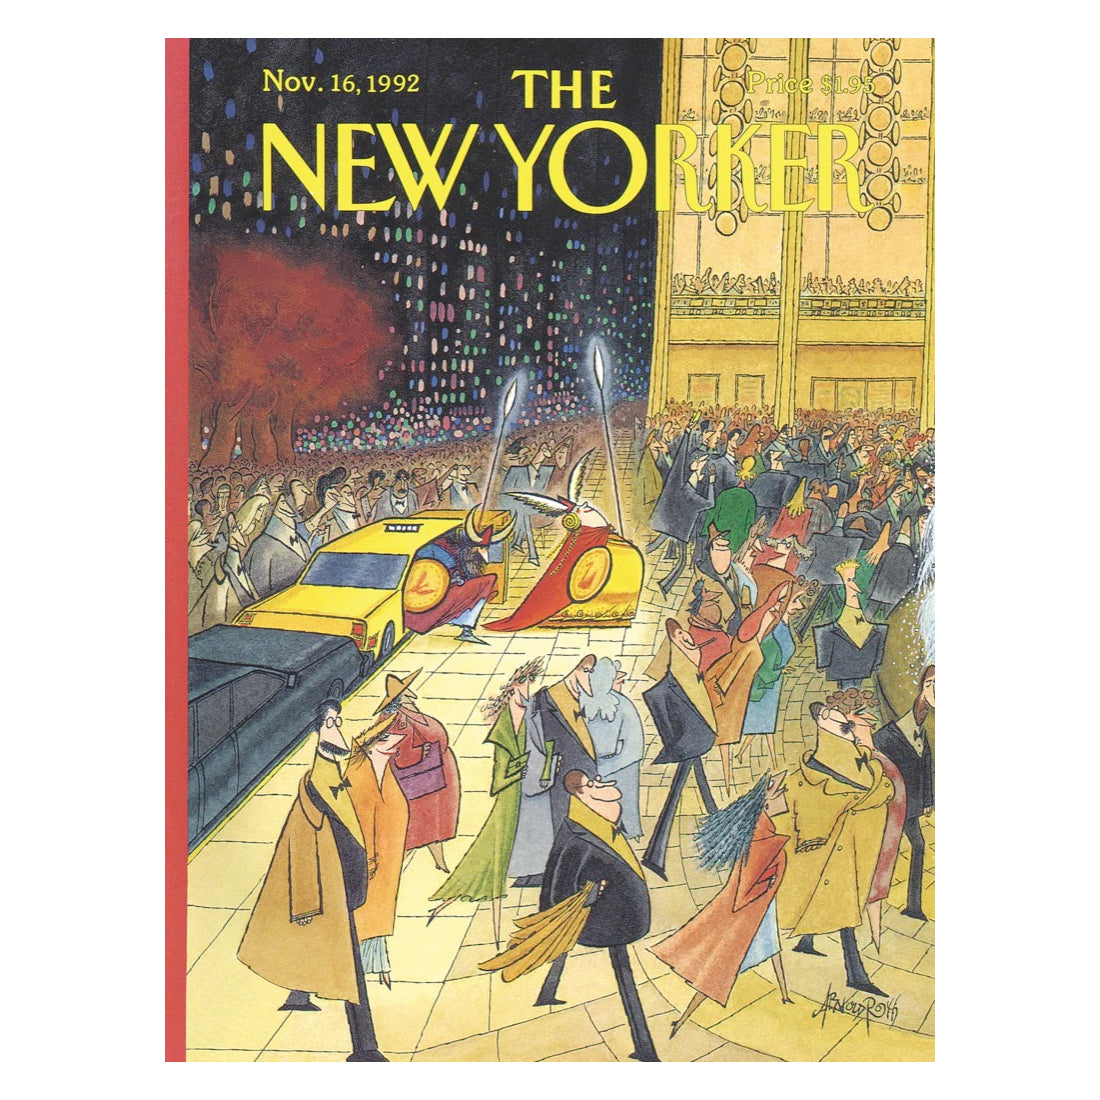 Puzzel The New Yorker│A Night at the opera 1000 stuks│New York Puzzle Company│art. NPZNY1956│afbeelding puzzel